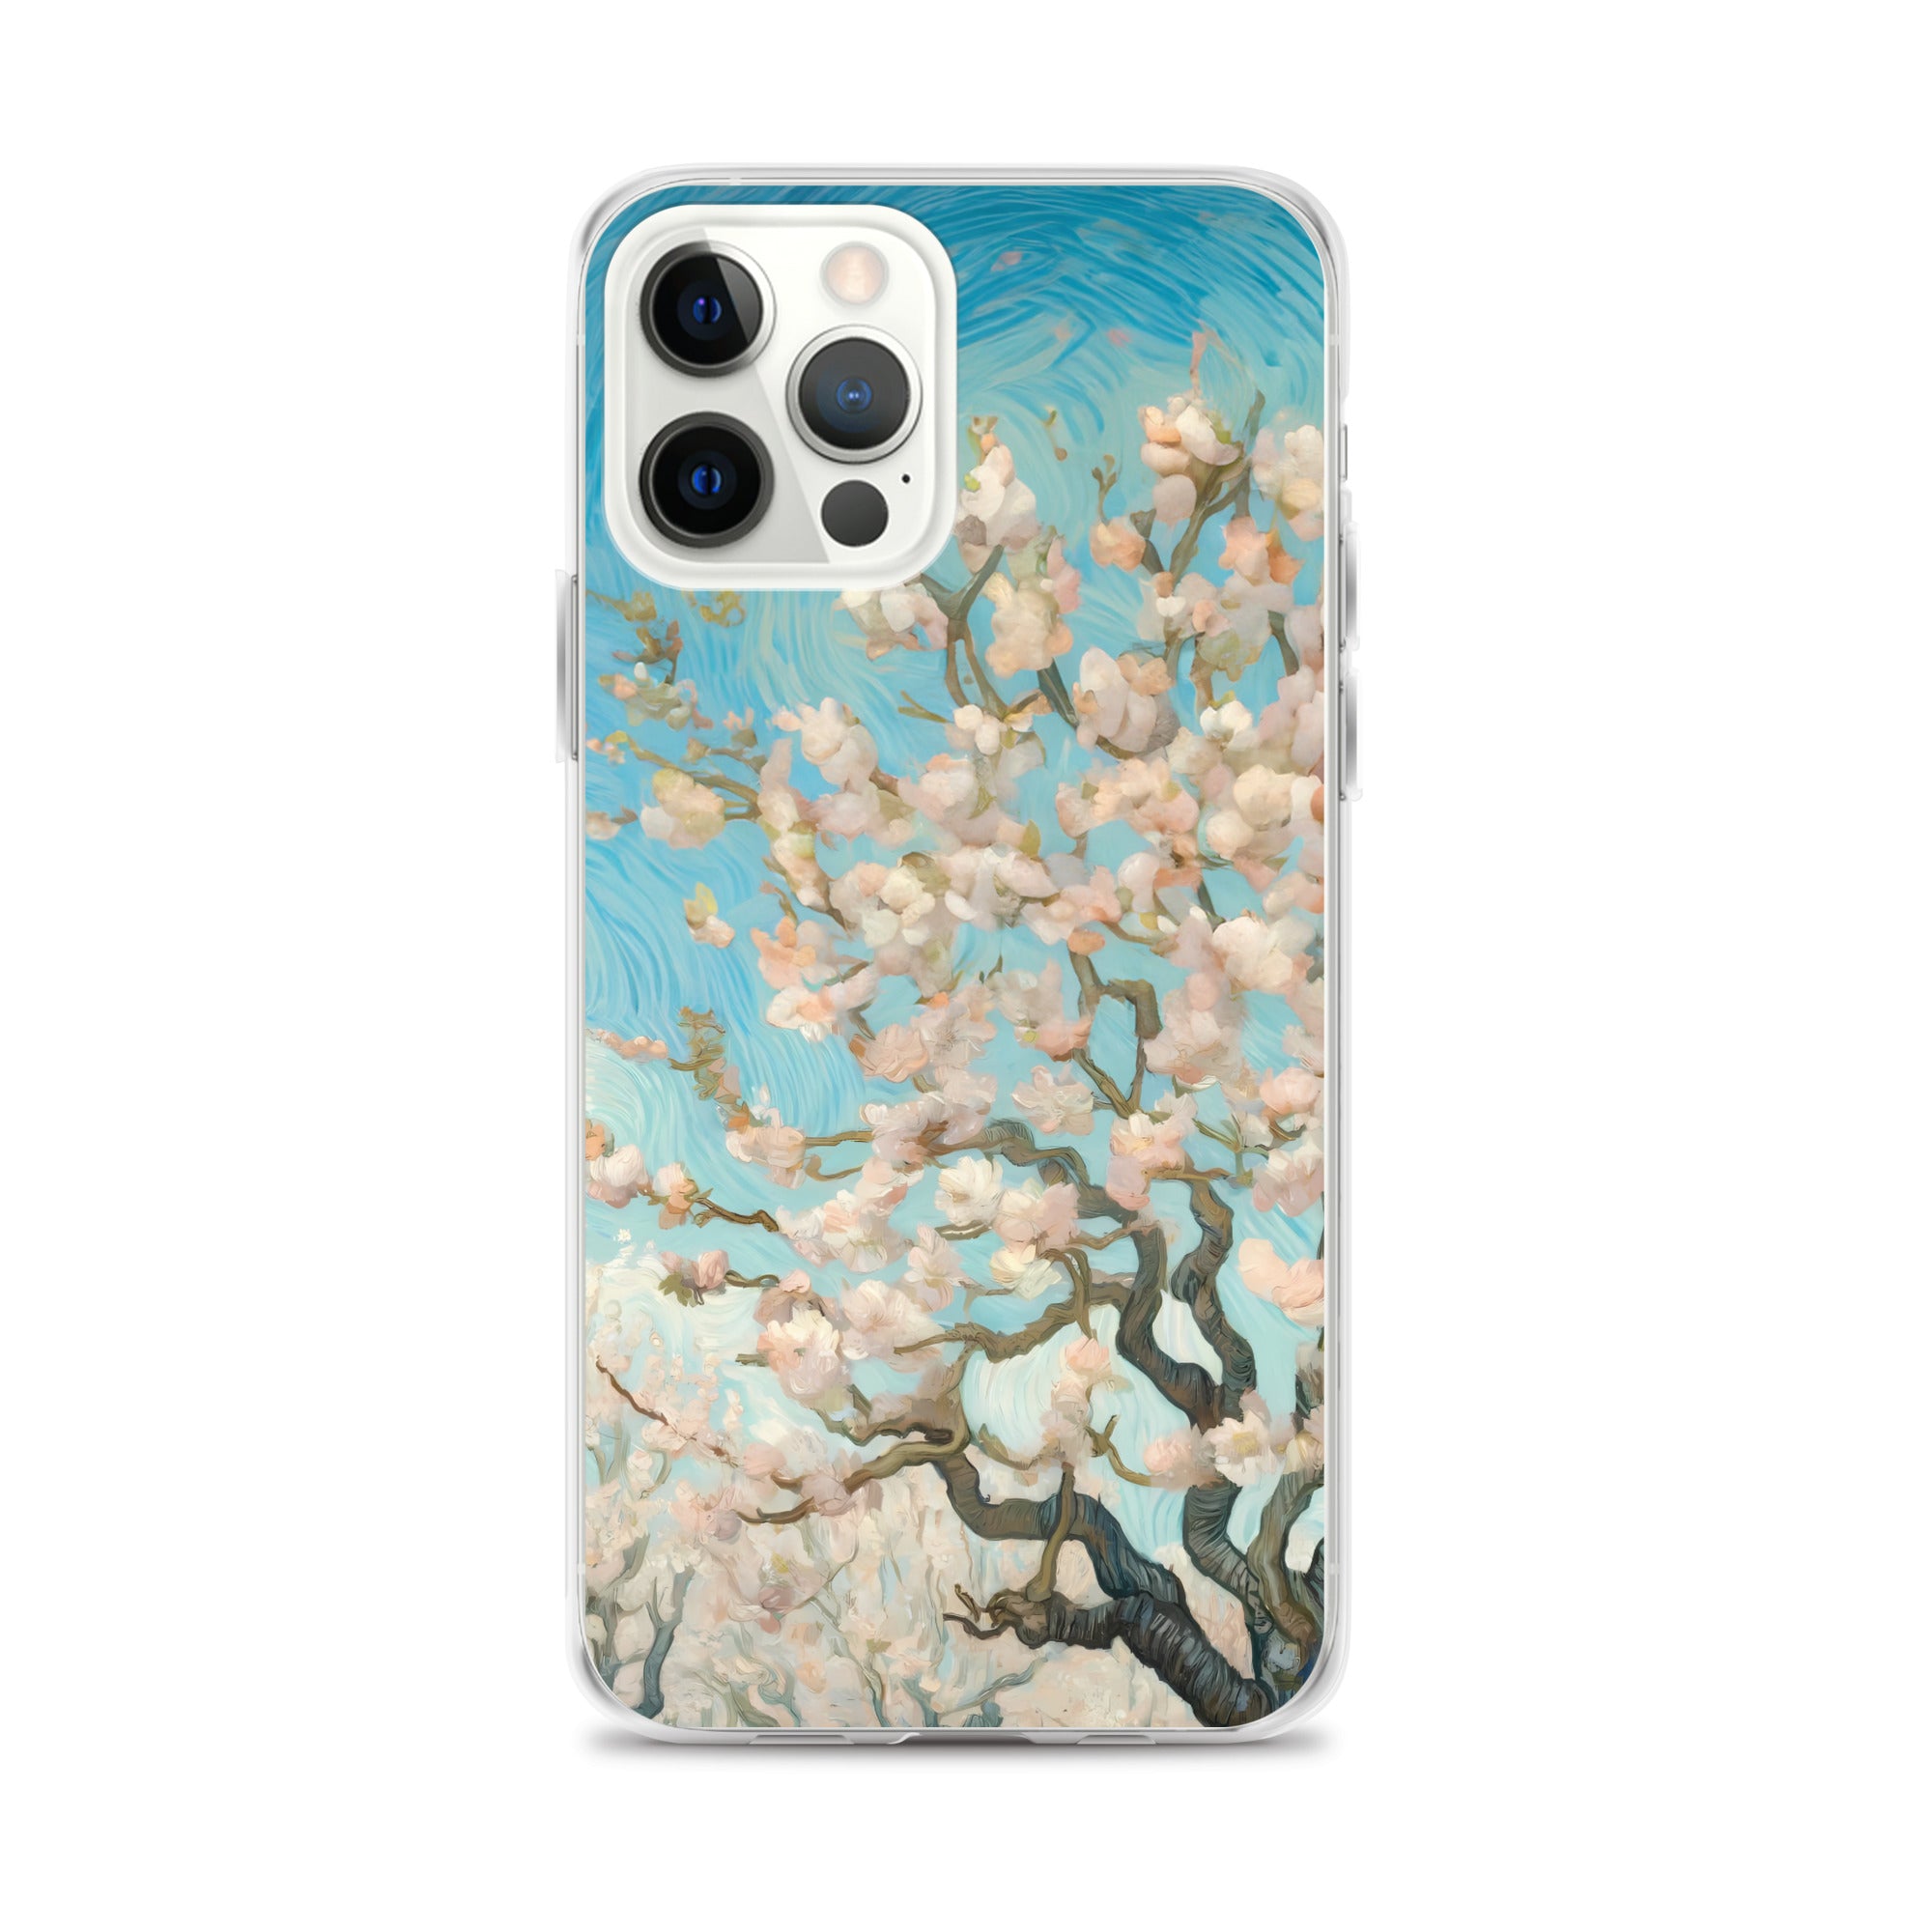 Vincent van Gogh „Blühender Obstgarten“, berühmtes Gemälde, iPhone®-Hülle | Transparente Kunsthülle für iPhone®